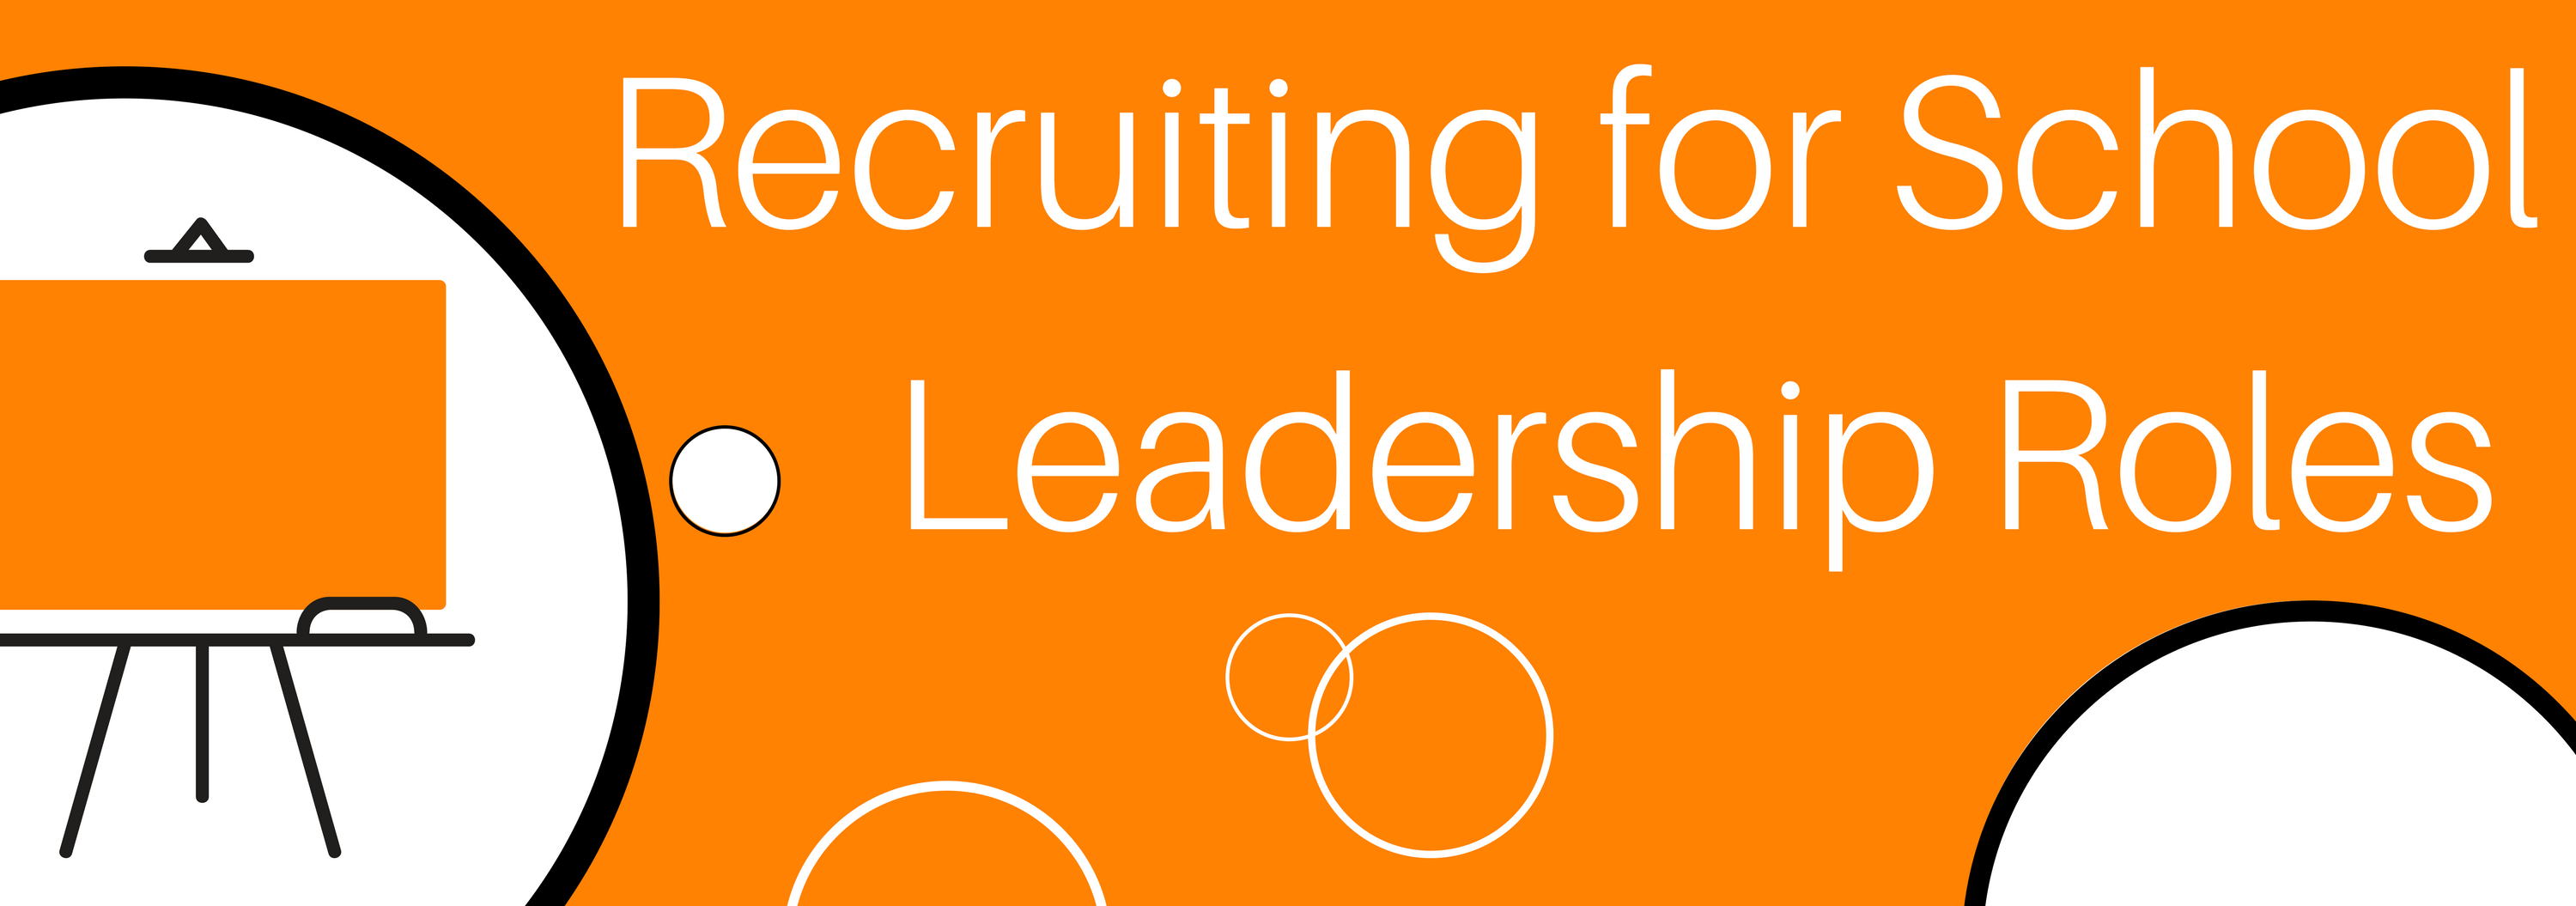 Recruiting School Leadership roles 